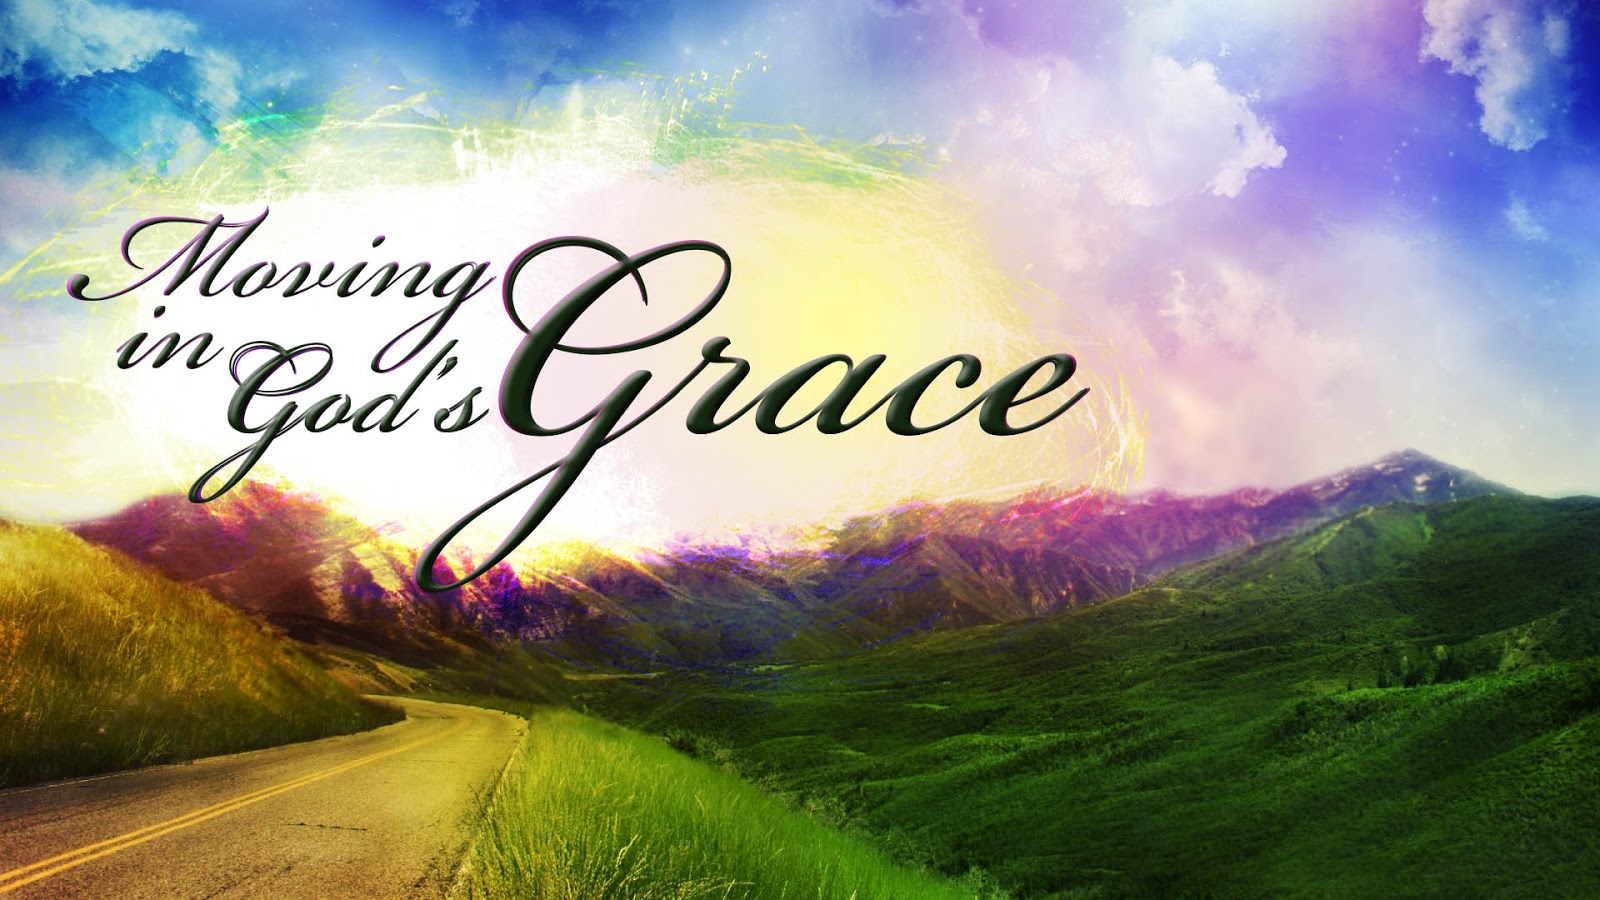 Grace Moving in GOD's